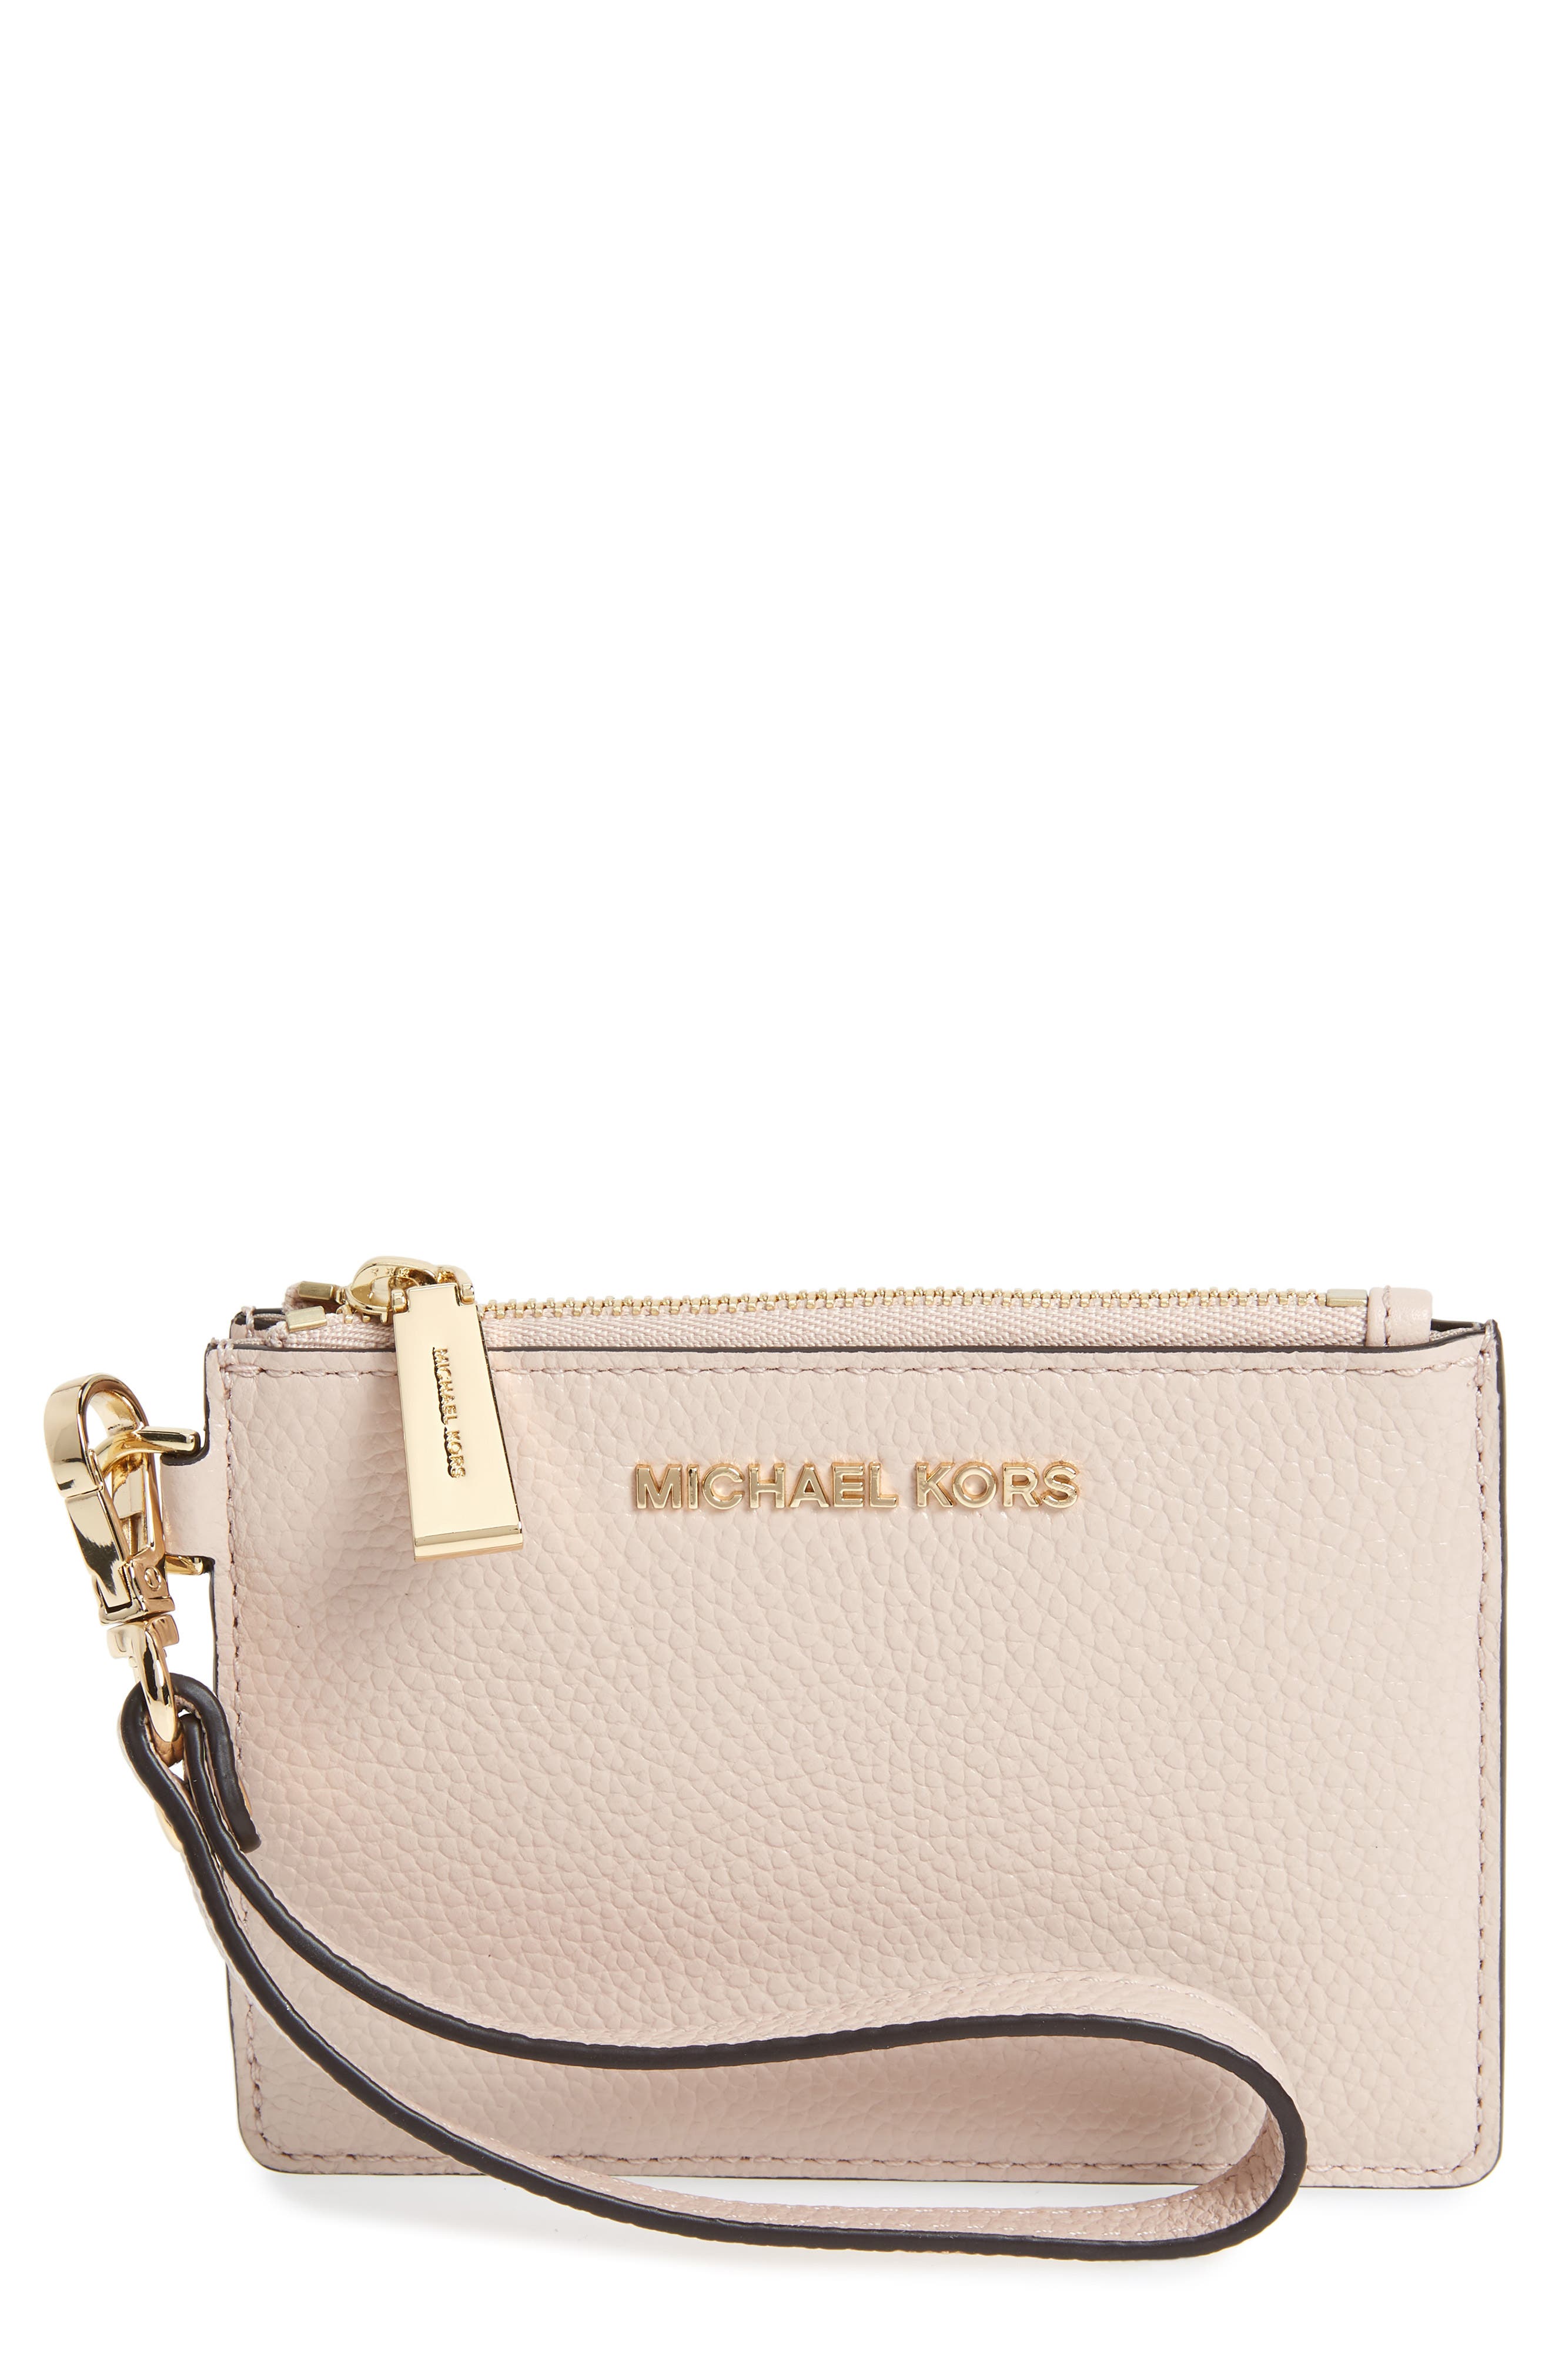 michael kors small light pink purse